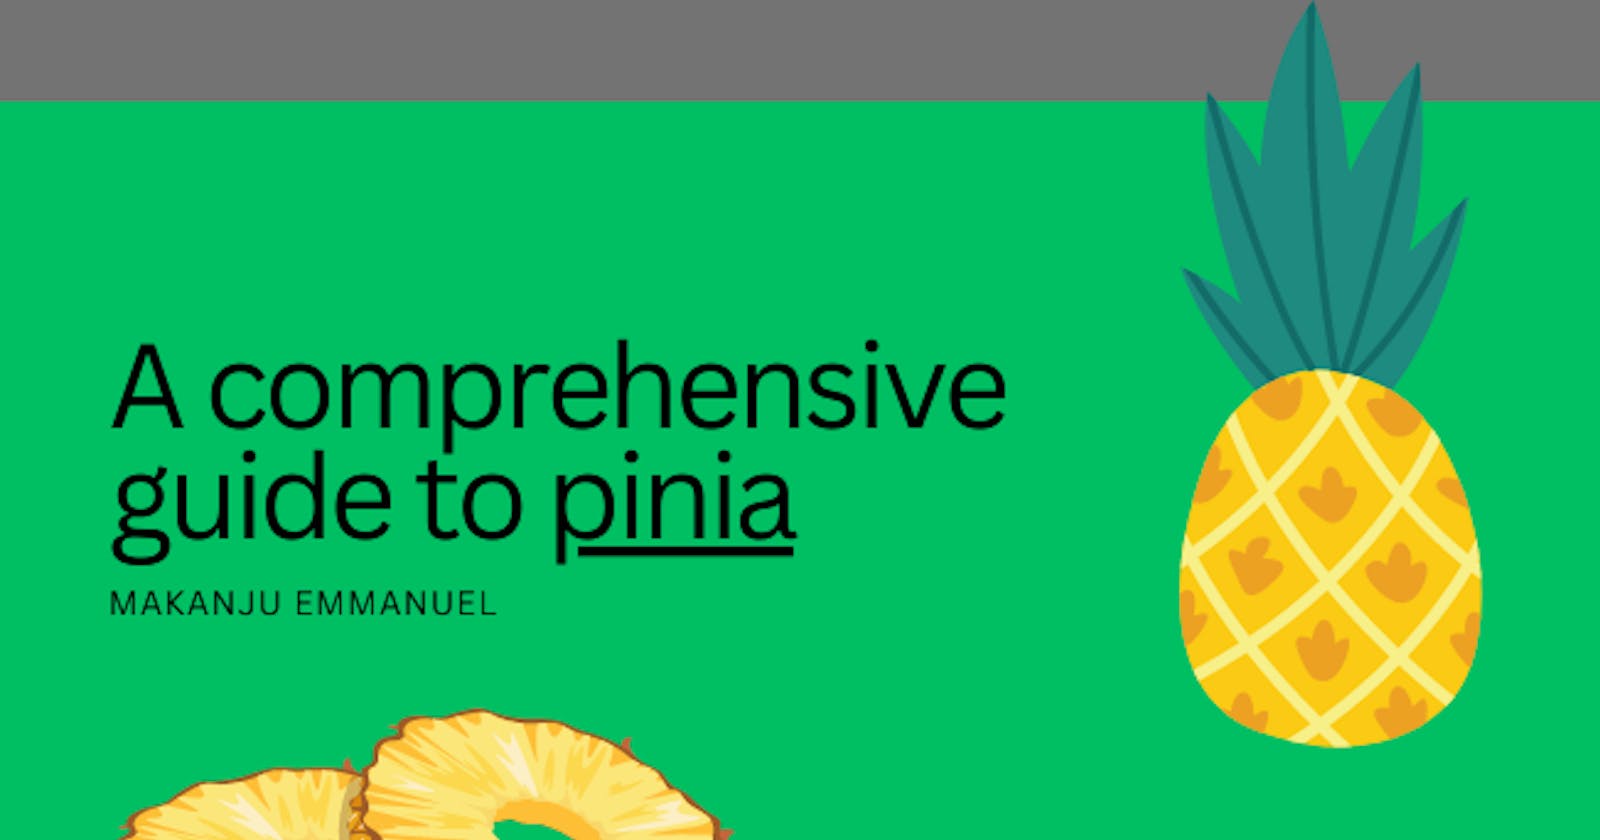 A comprehensive guide to pinia